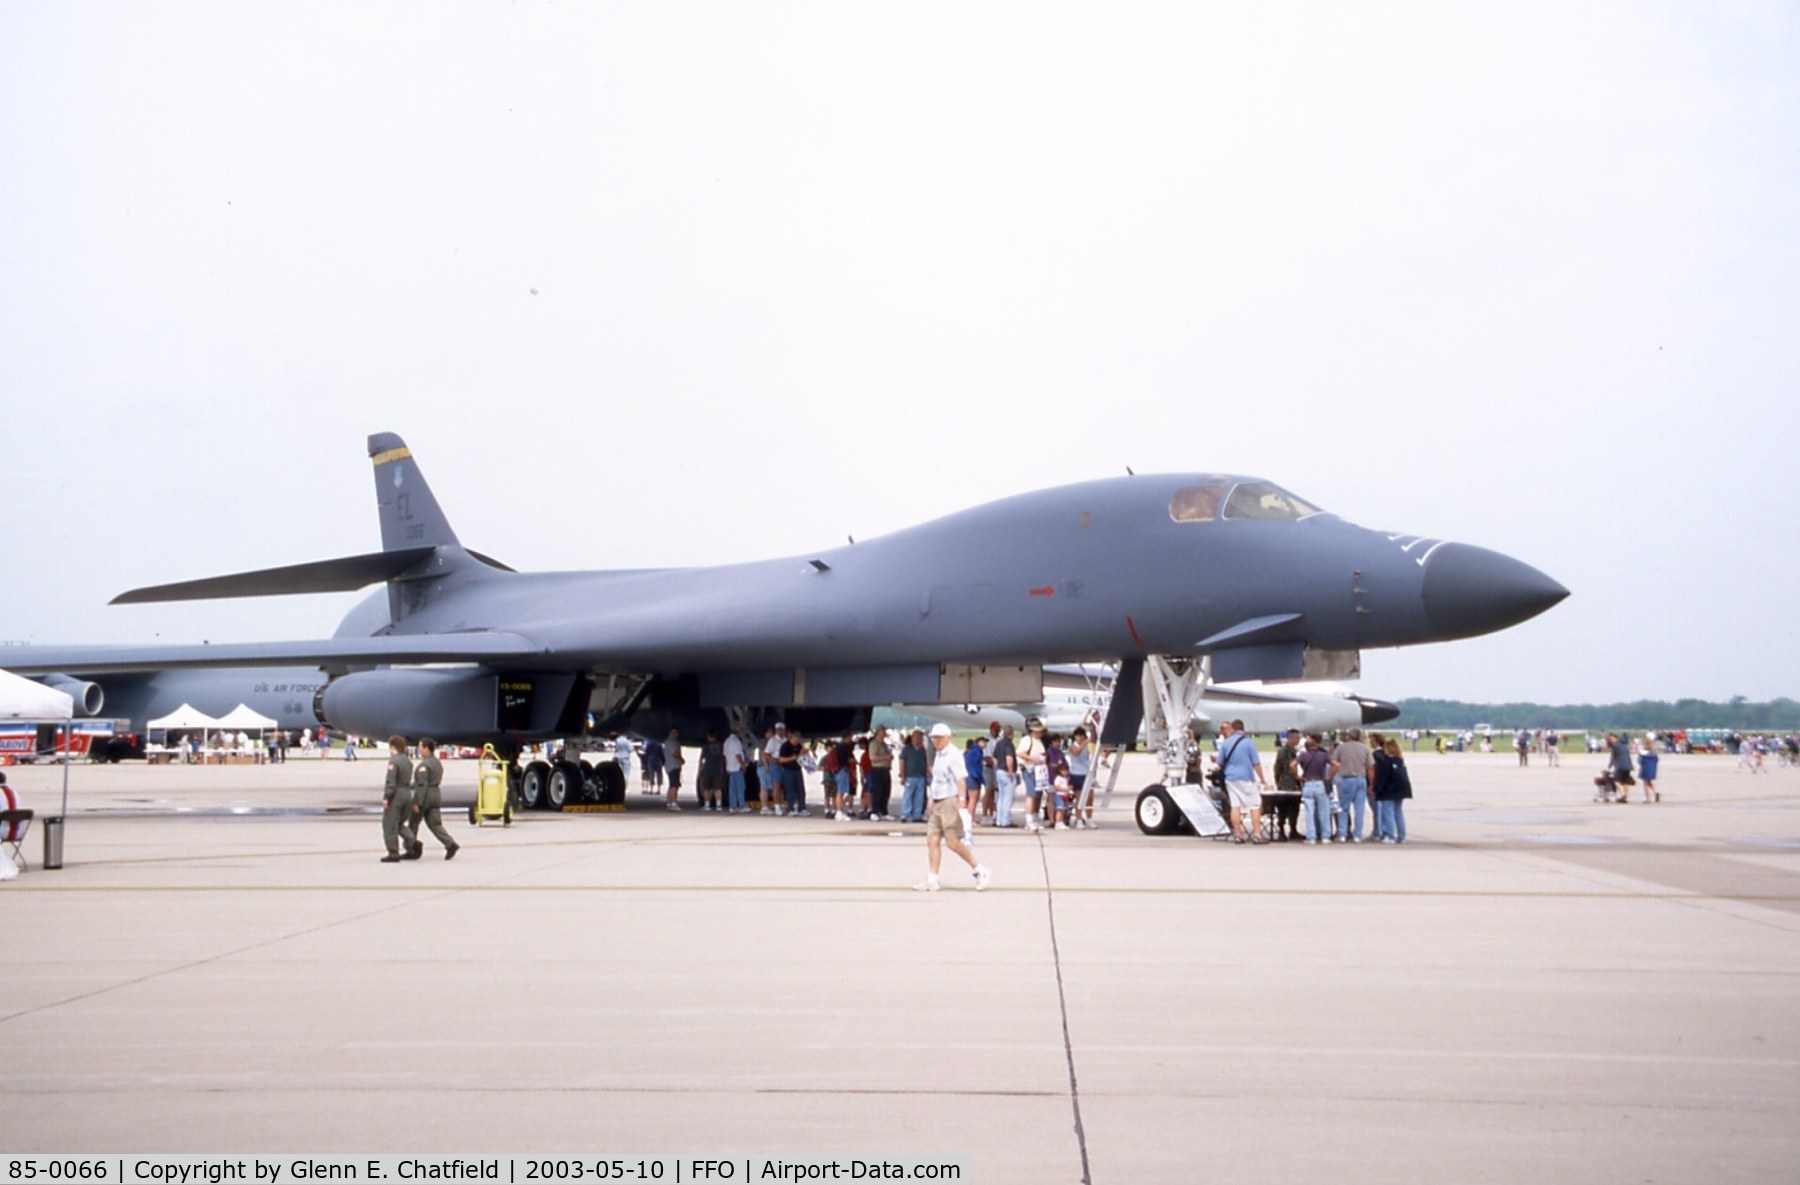 85-0066, 1985 Rockwell B-1B Lancer C/N 26, B-1B at the 100th Anniversary of Flight